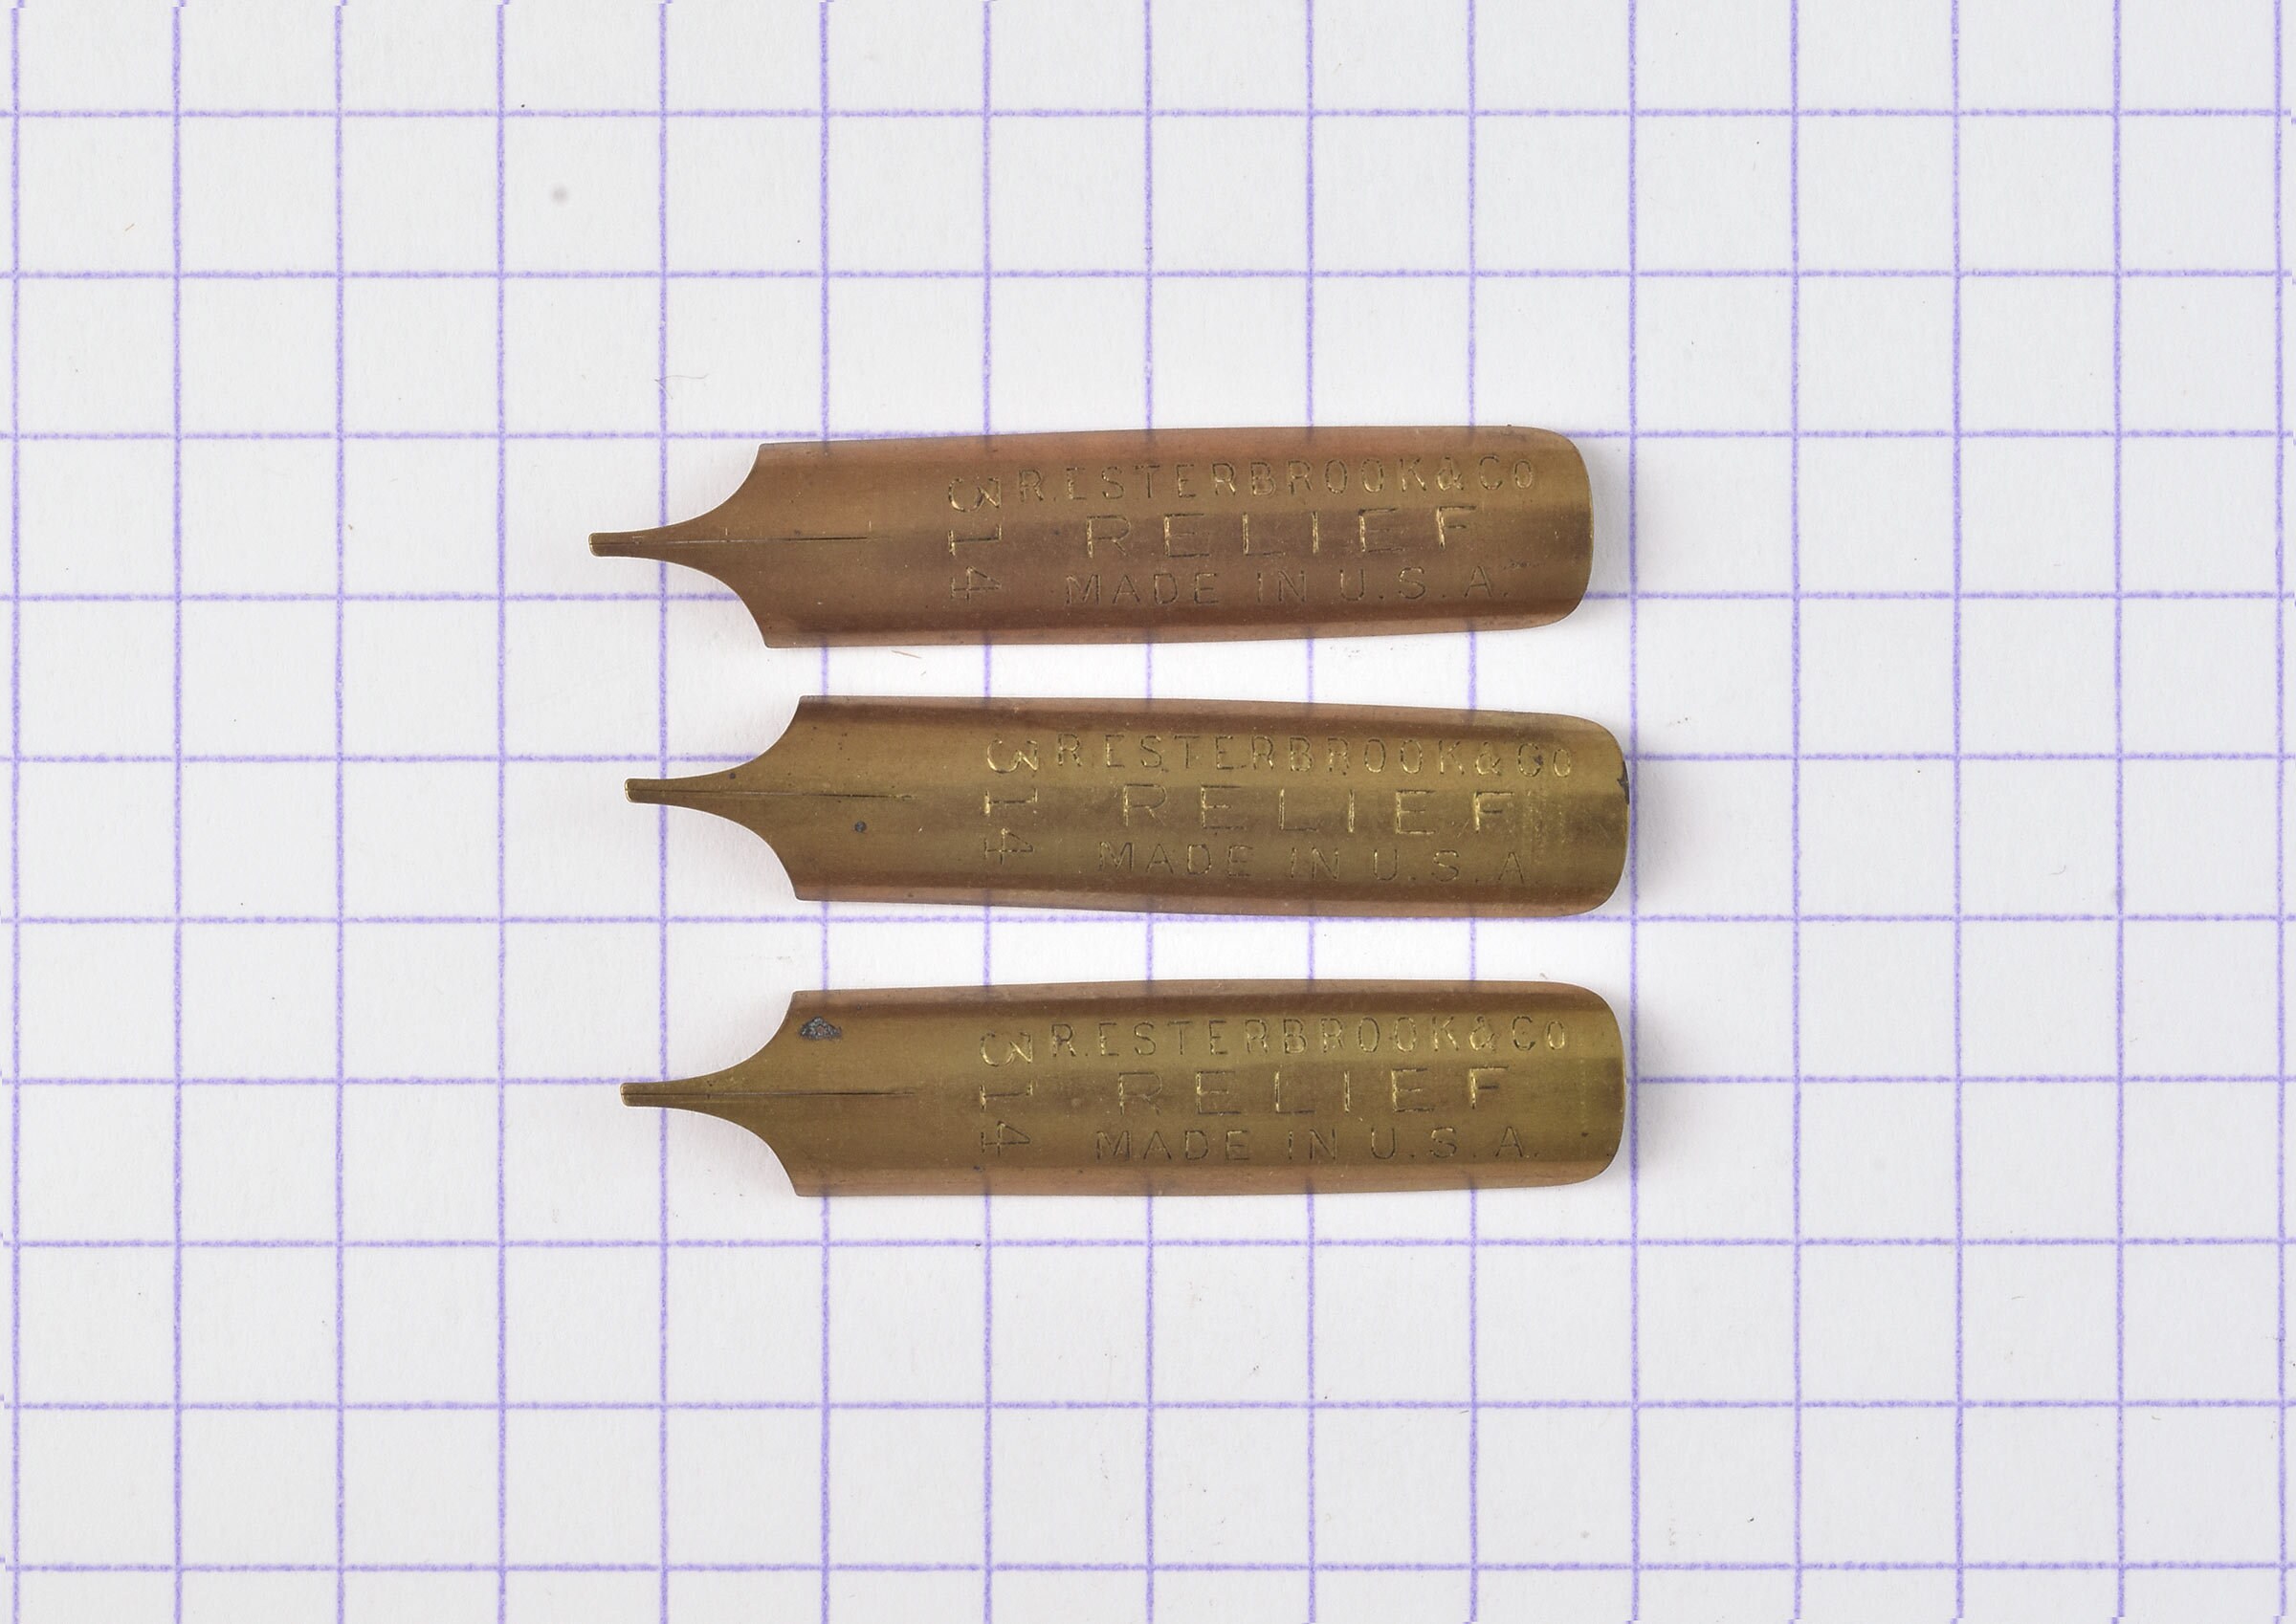 Vintage Esterbrook RELIEF No. 314 Dip Pen Nibs - Set of 3 – Kiwipens